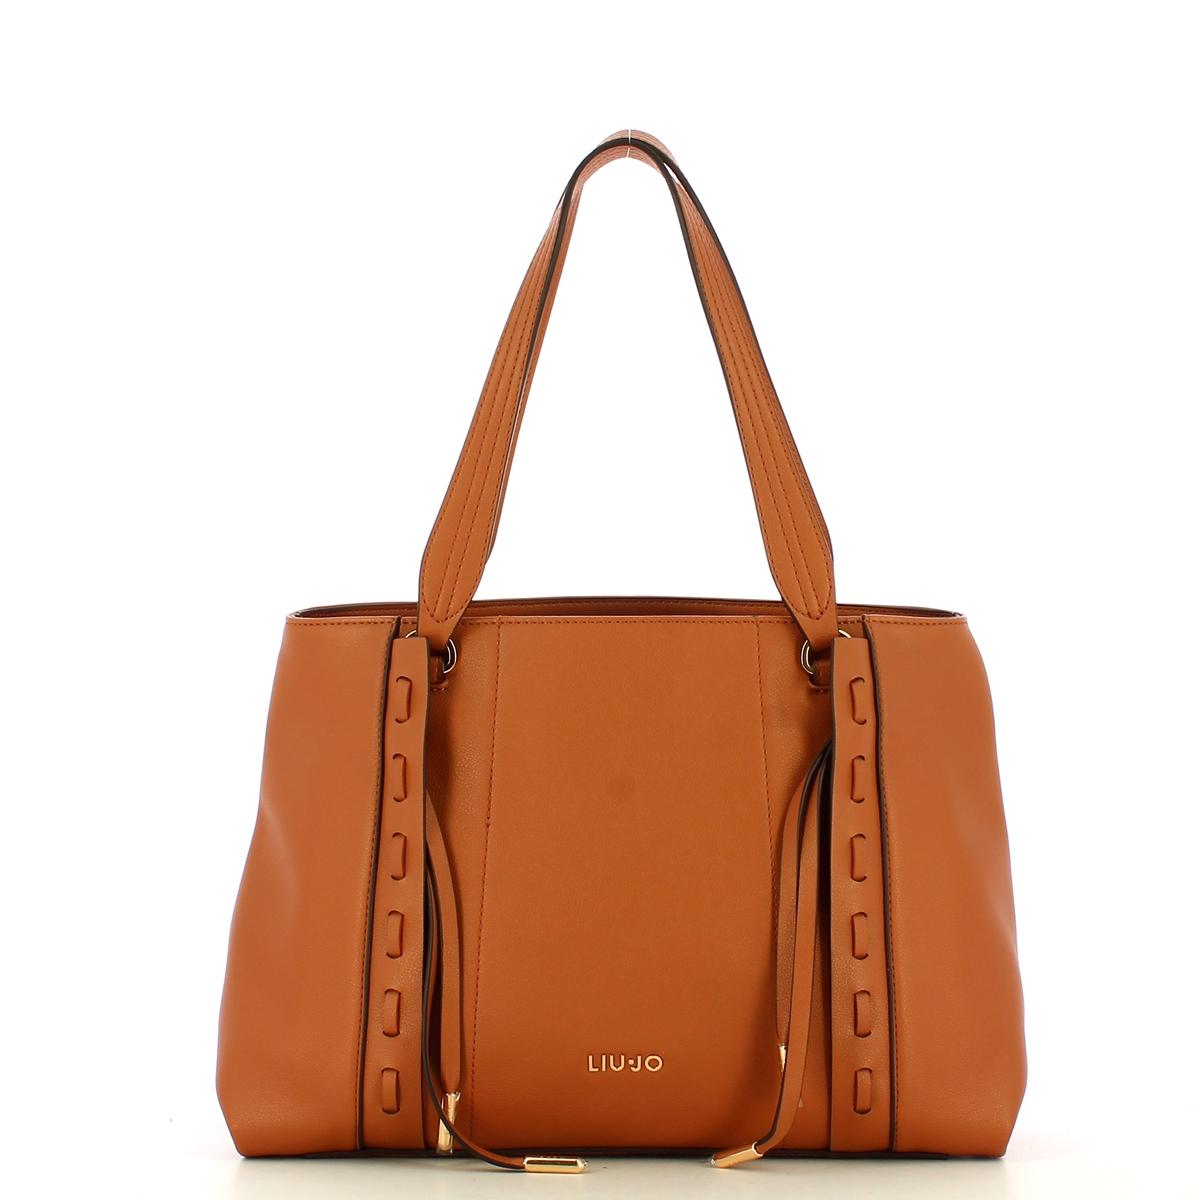 Liu Jo women's stylish bag - brown